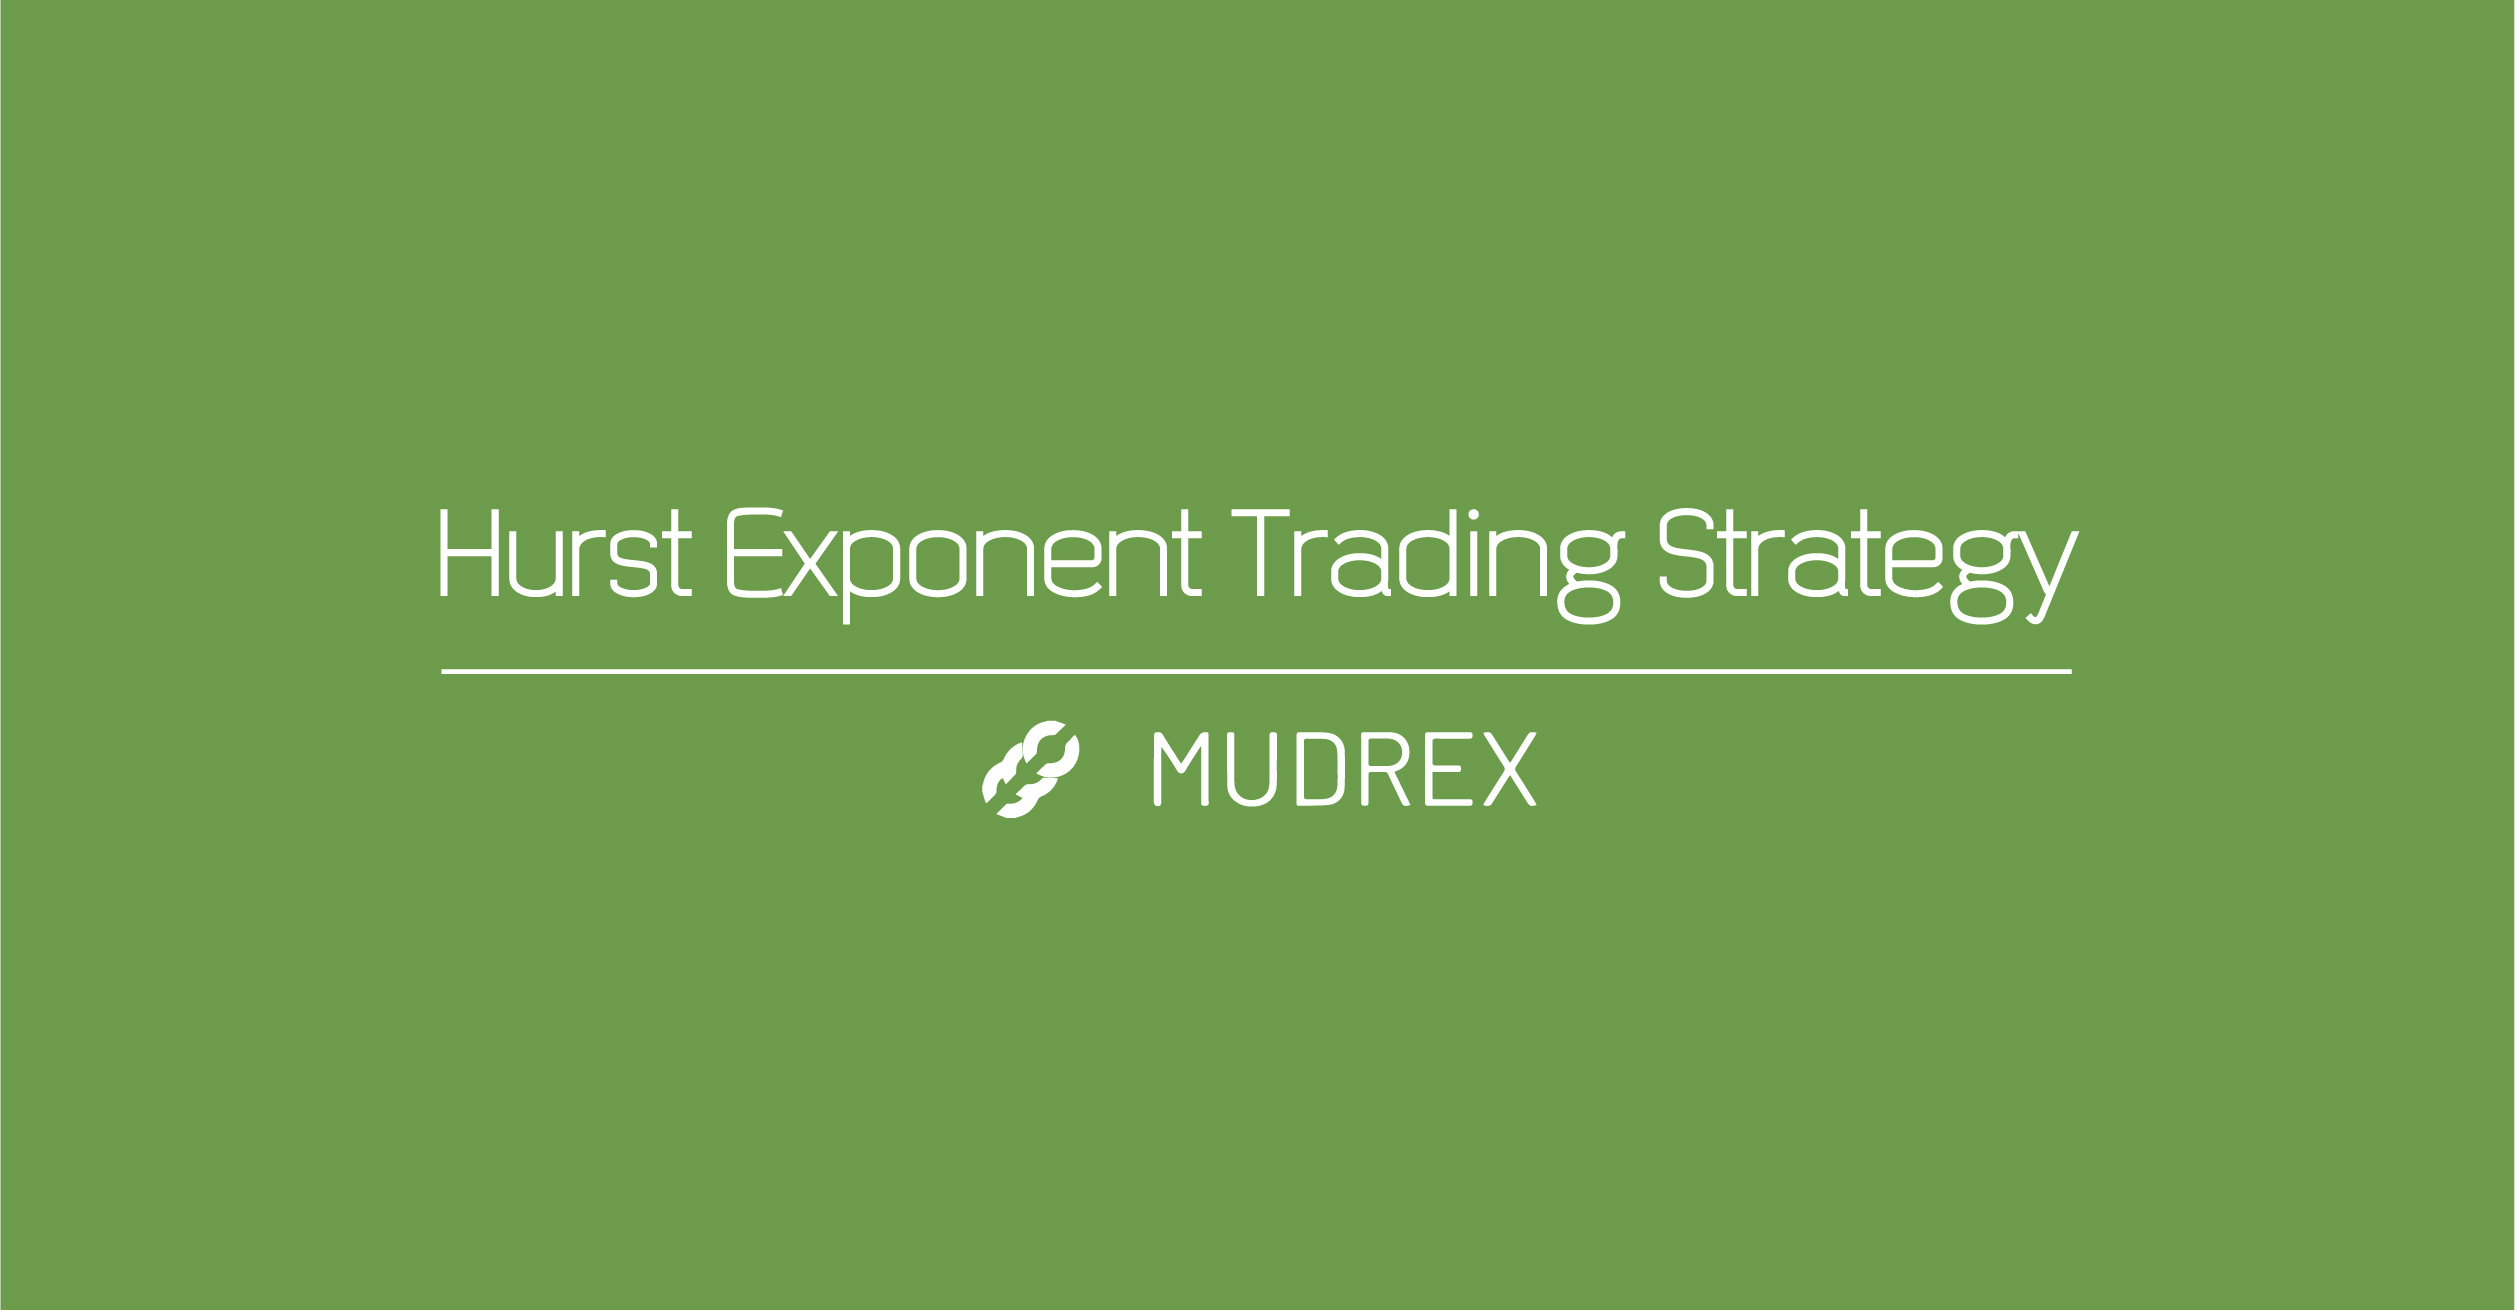 Hurst Exponent Trading Strategy